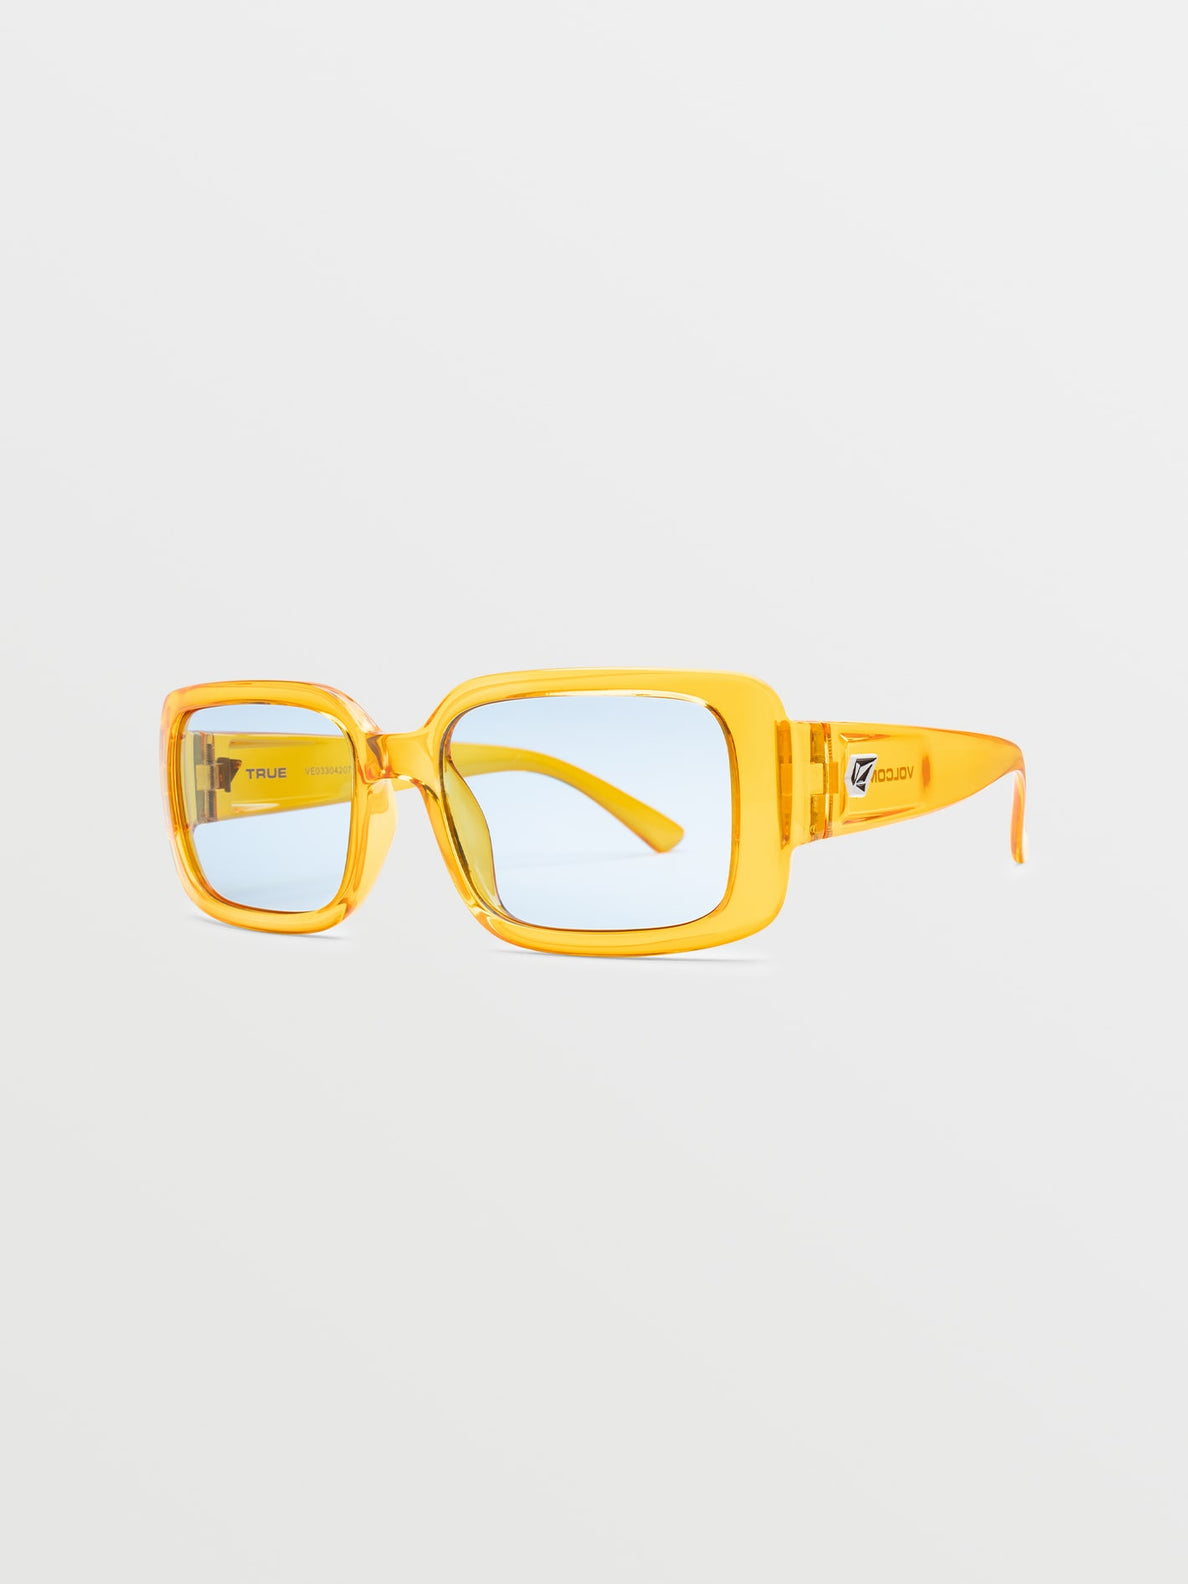 Gafas de sol Volcom True Sunglasses - Gloss Mustard/Blue | Gafas de sol | Volcom Shop | surfdevils.com